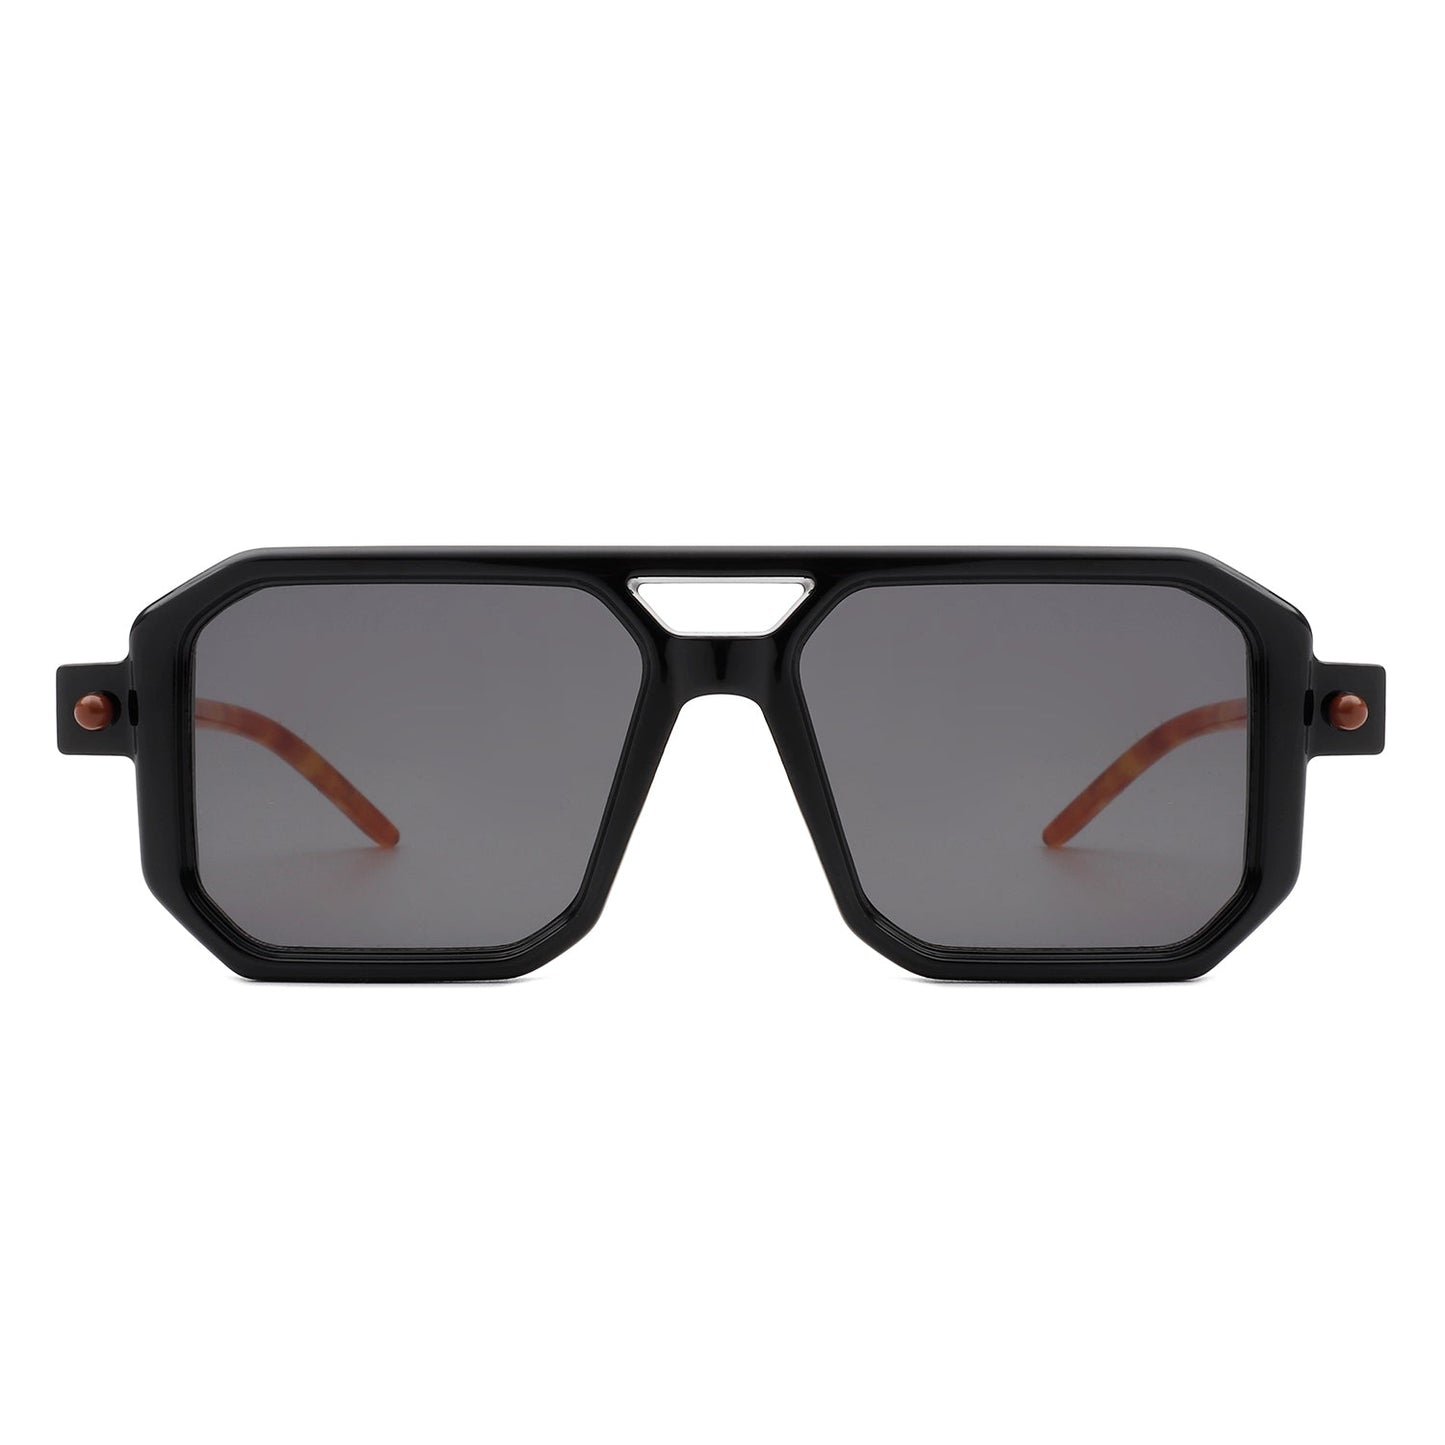 Bluebird - Retro Square Flat Top Brow-Bar Fashion Sunglasses-1